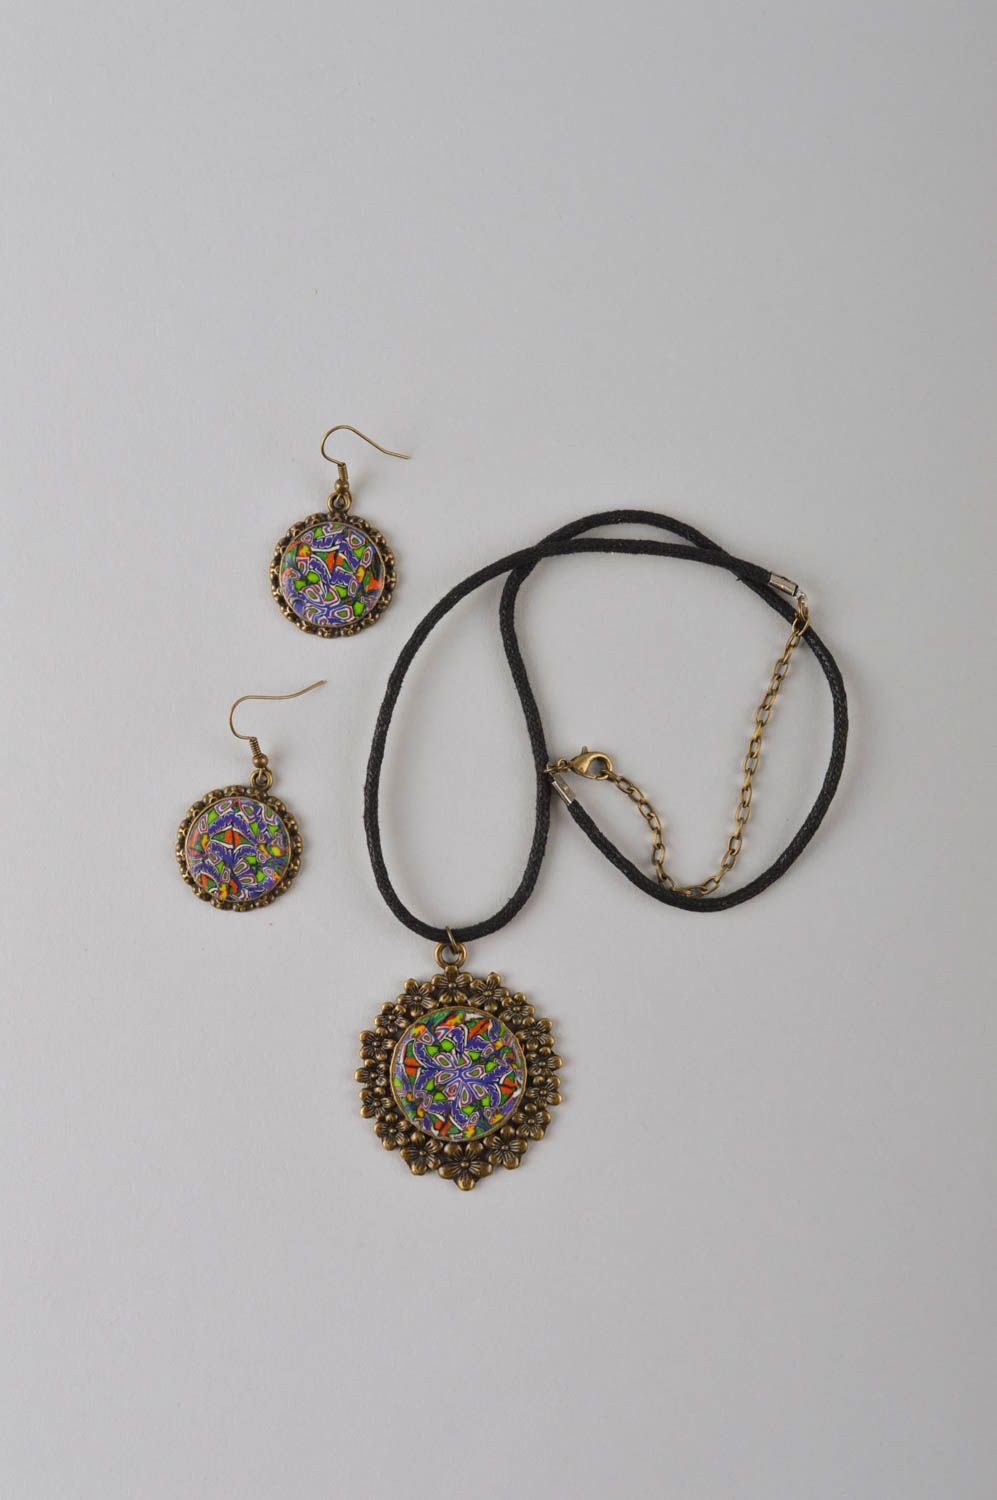 Handmade pendant and earrings elite jewelry set stylish cute accessories photo 5